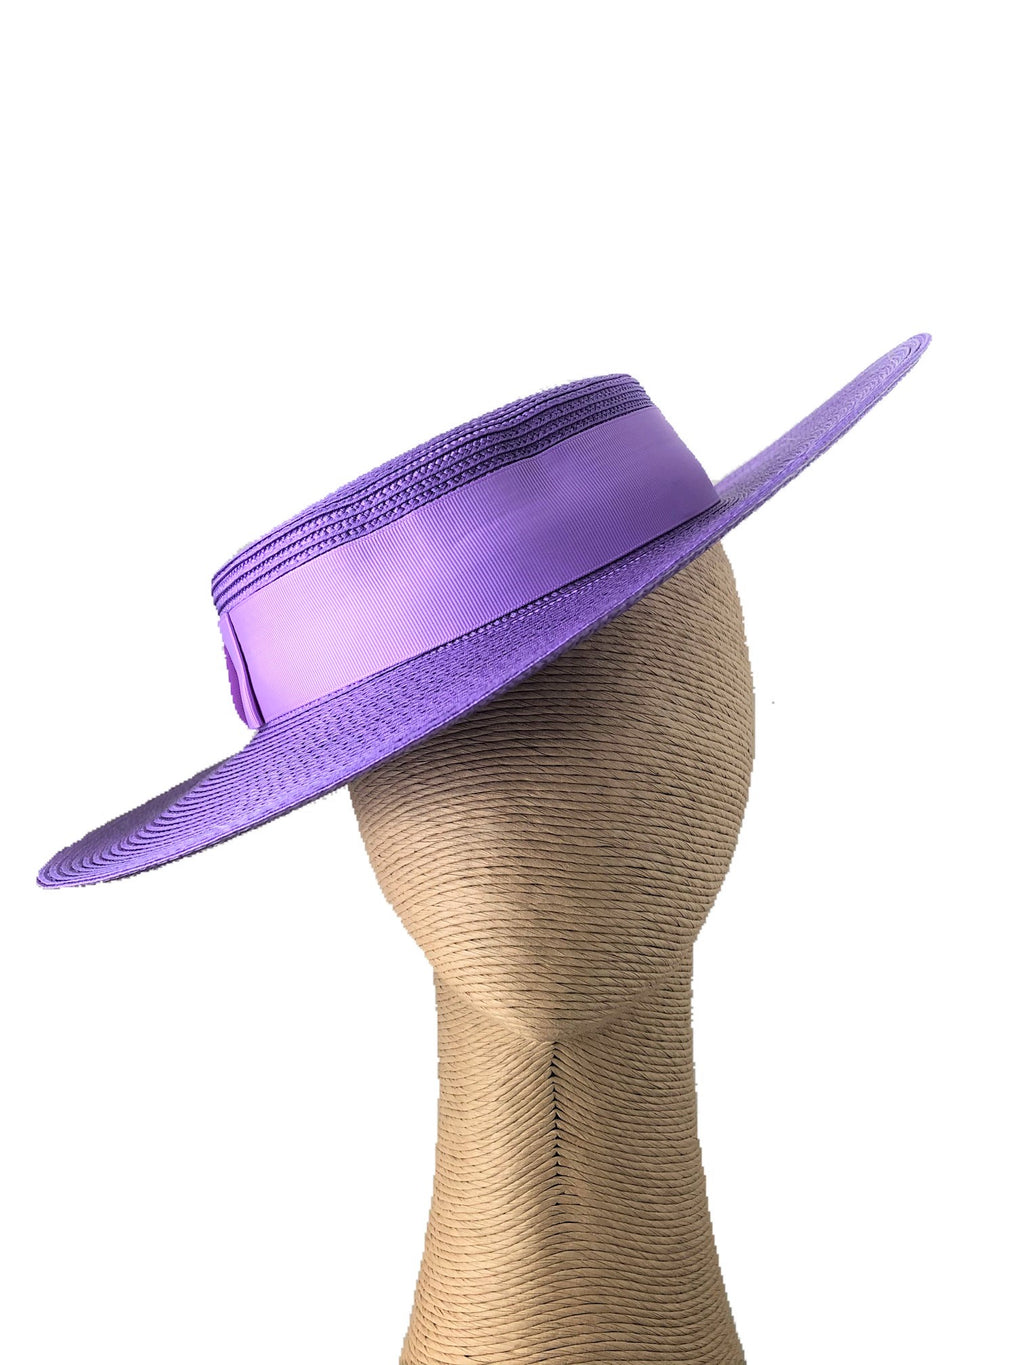 Morgan & Taylor Amora Boater Hat in Purple